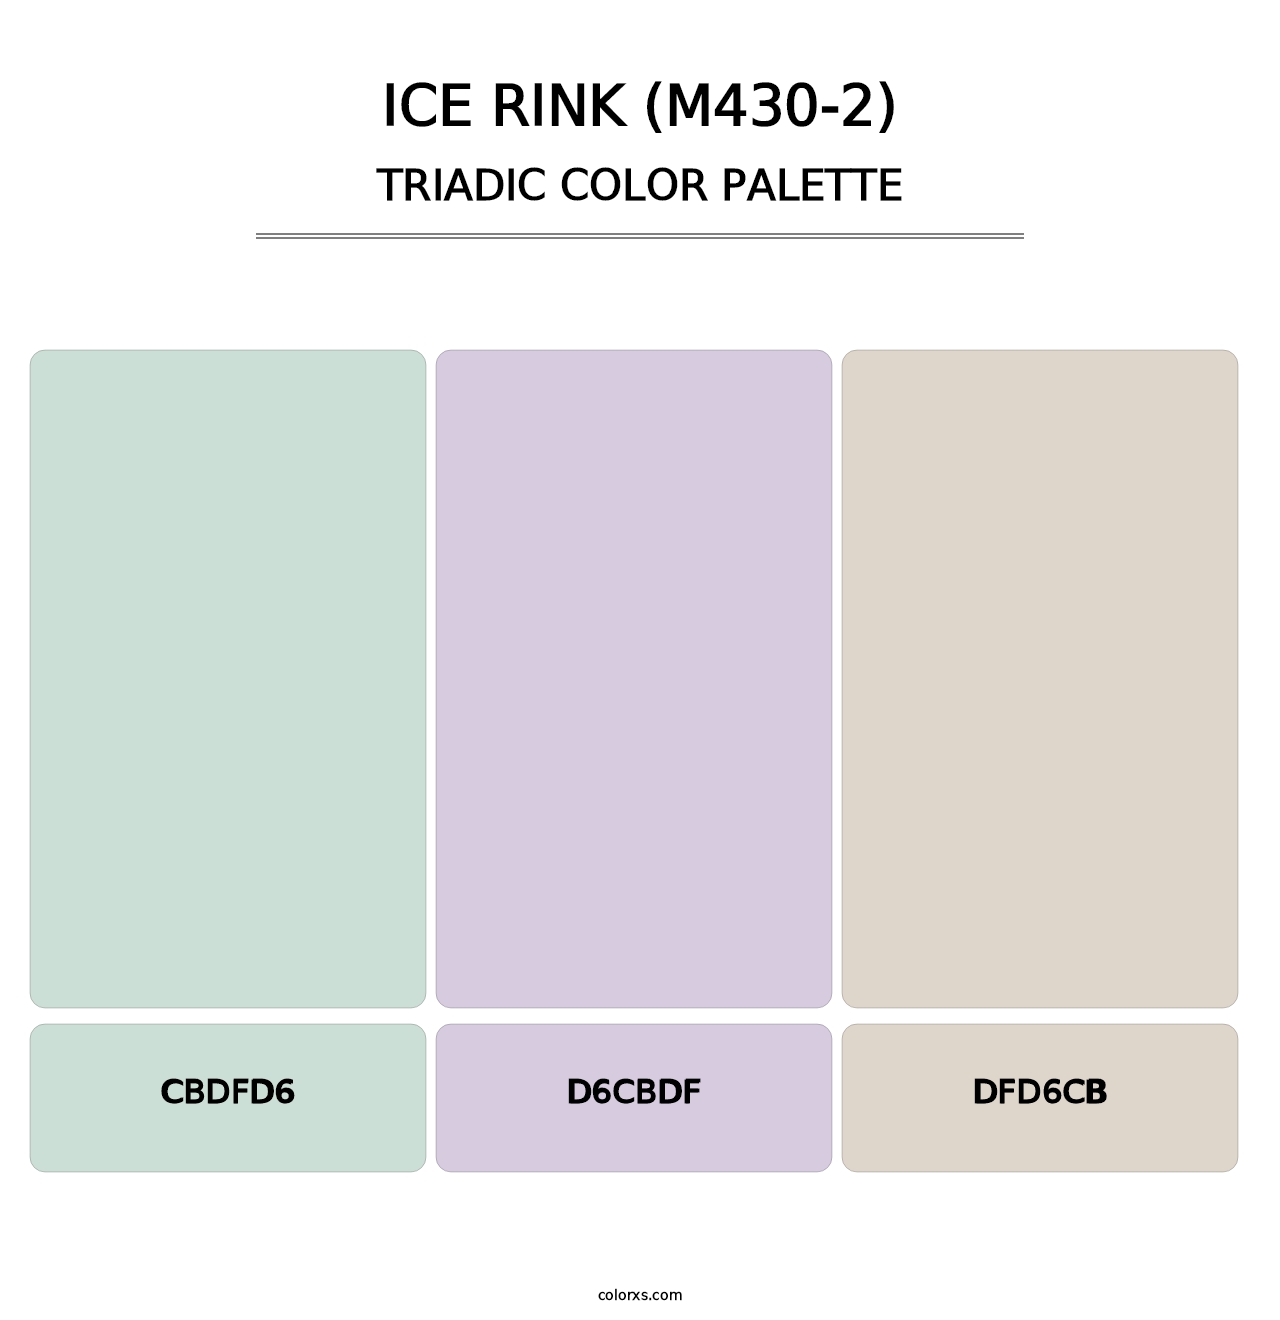 Ice Rink (M430-2) - Triadic Color Palette